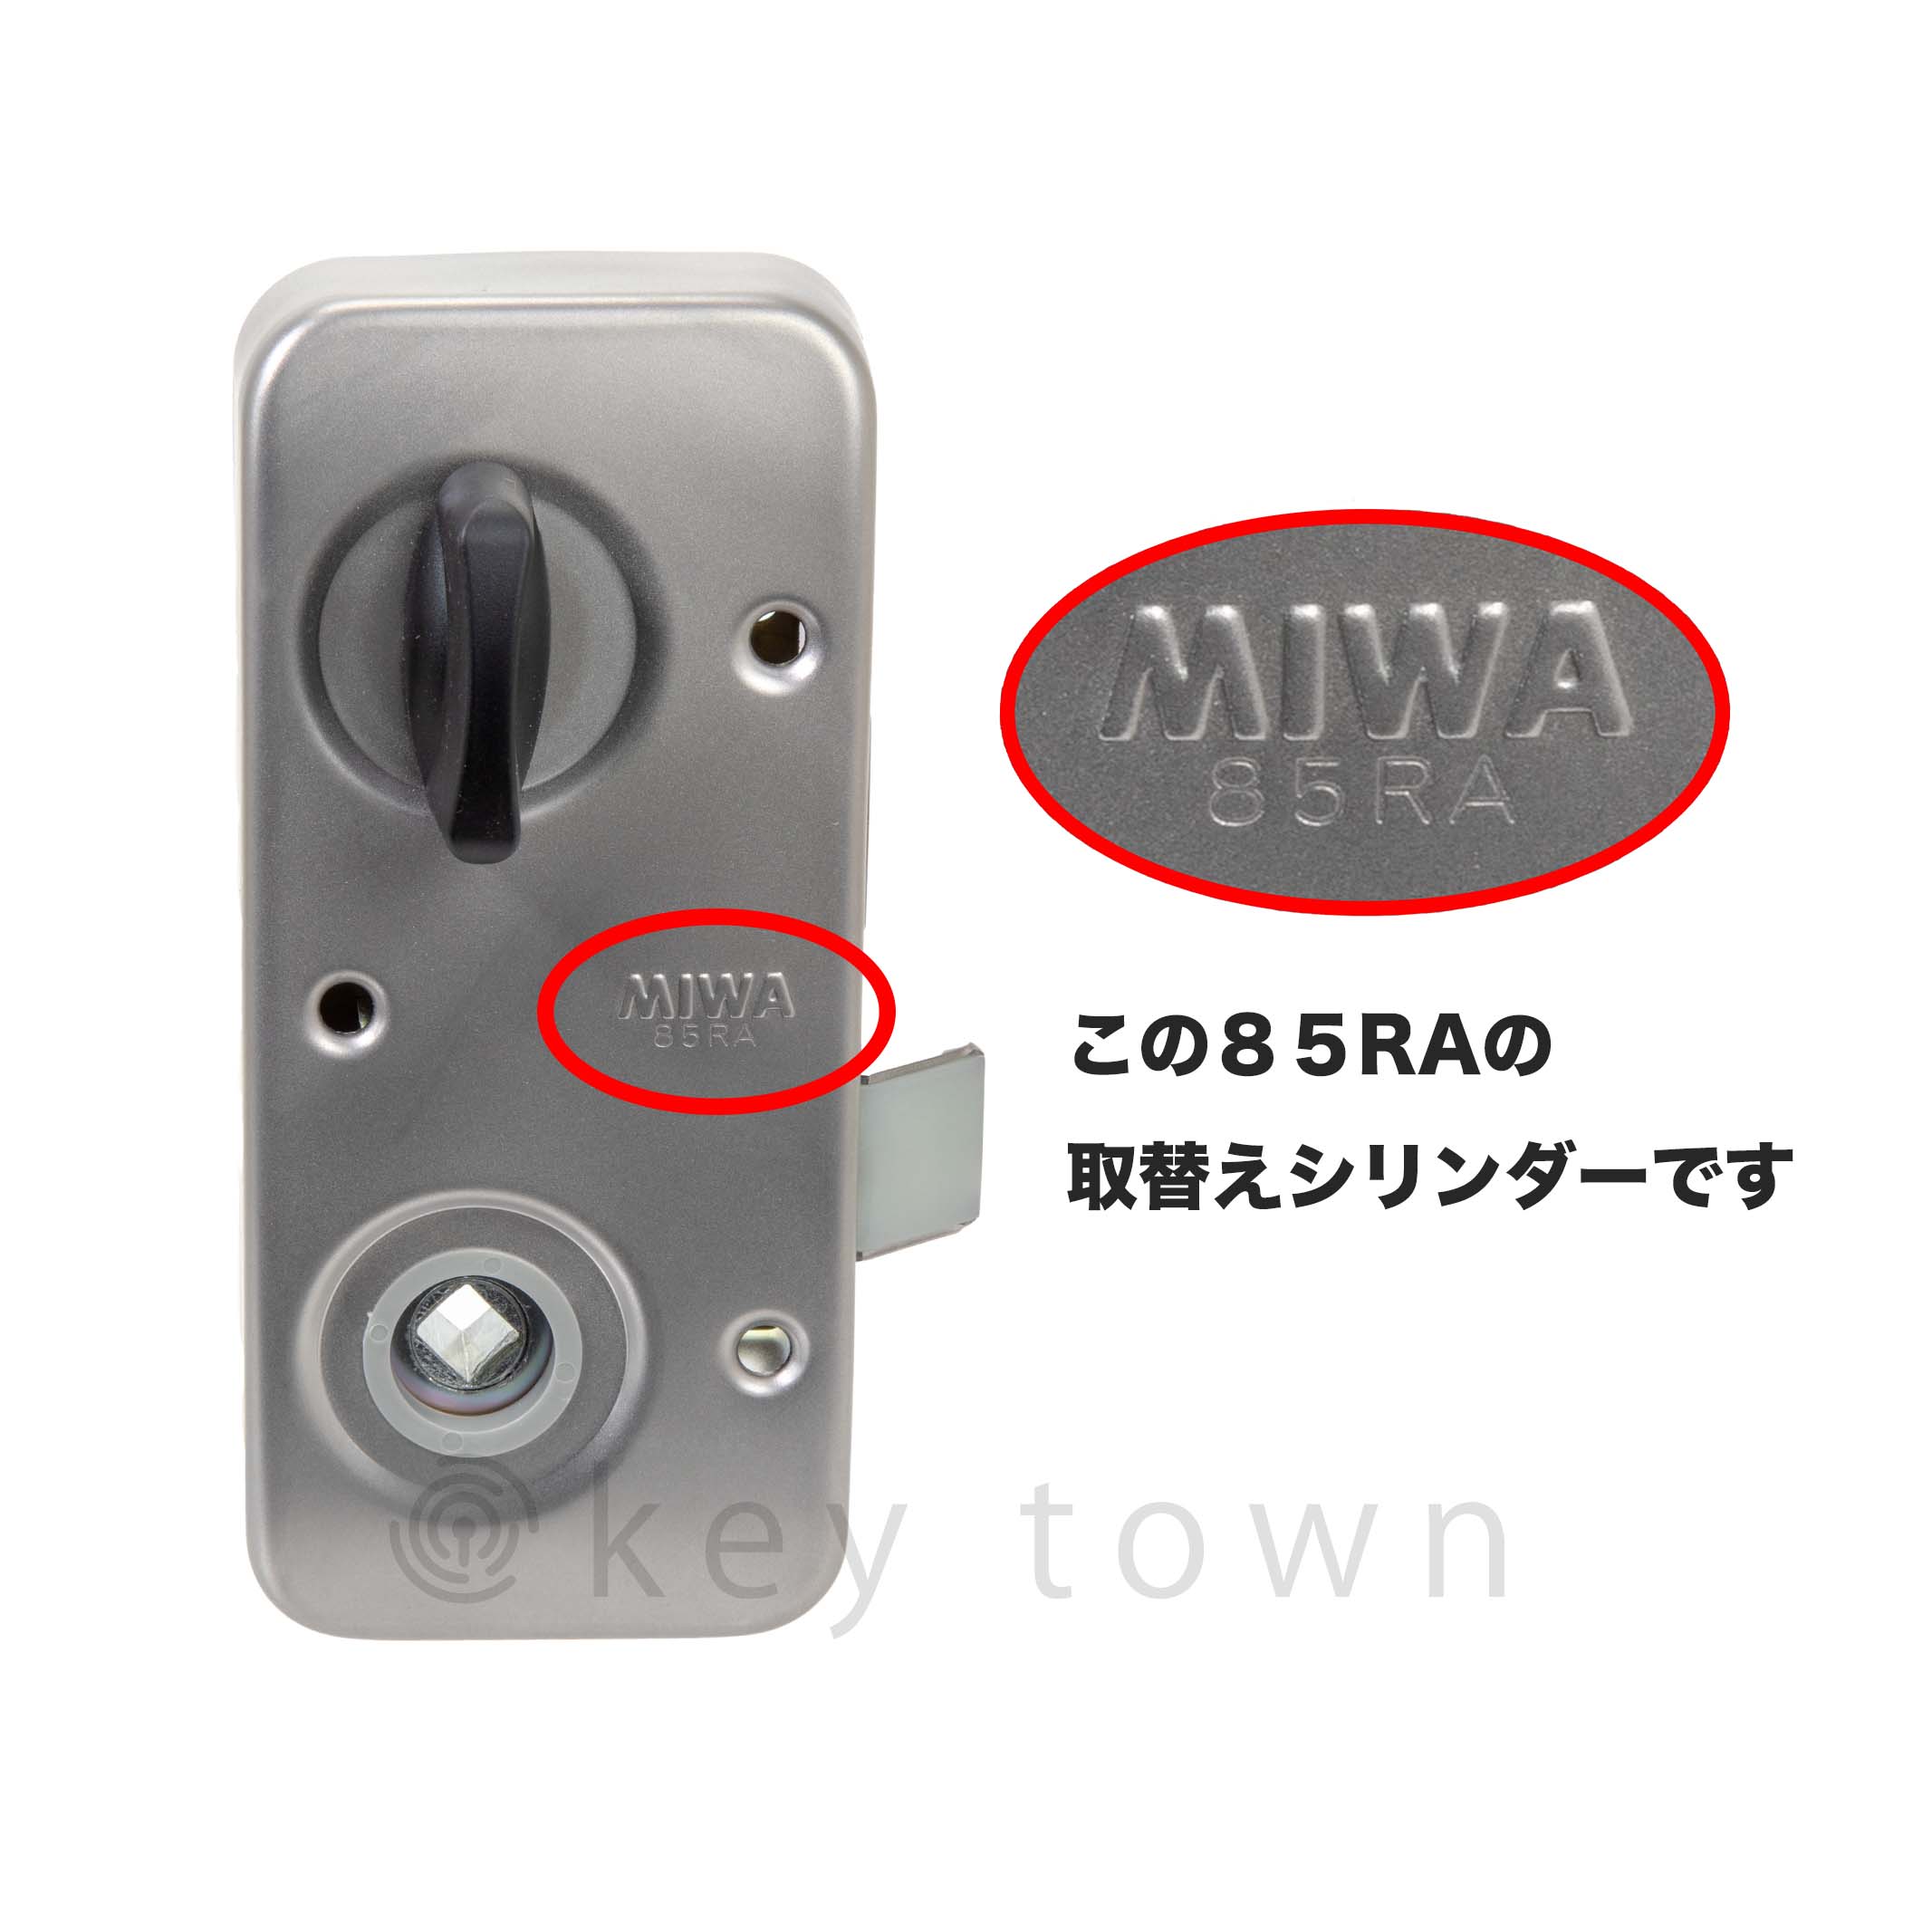 MIWA 【美和ロック】 U9 RA 85RA MCY-113 鍵 交換 取替えシリンダー ブロンズ色